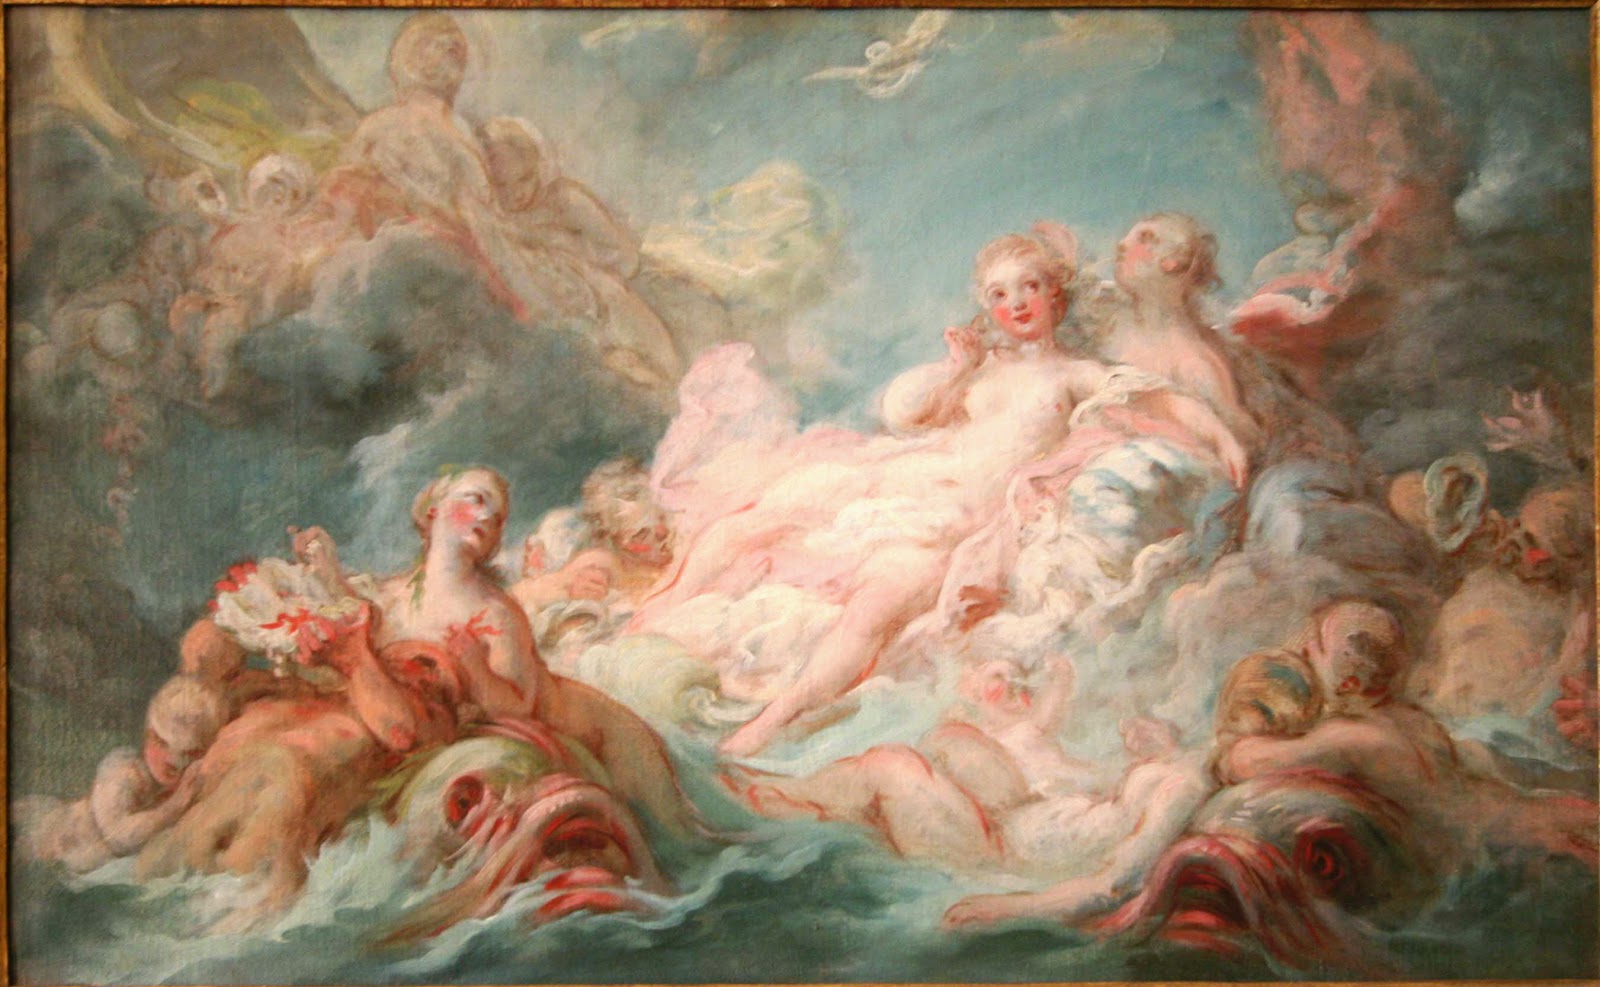 Jean-Honoré Fragonard, La Naissance de Vénus (1753-1755)